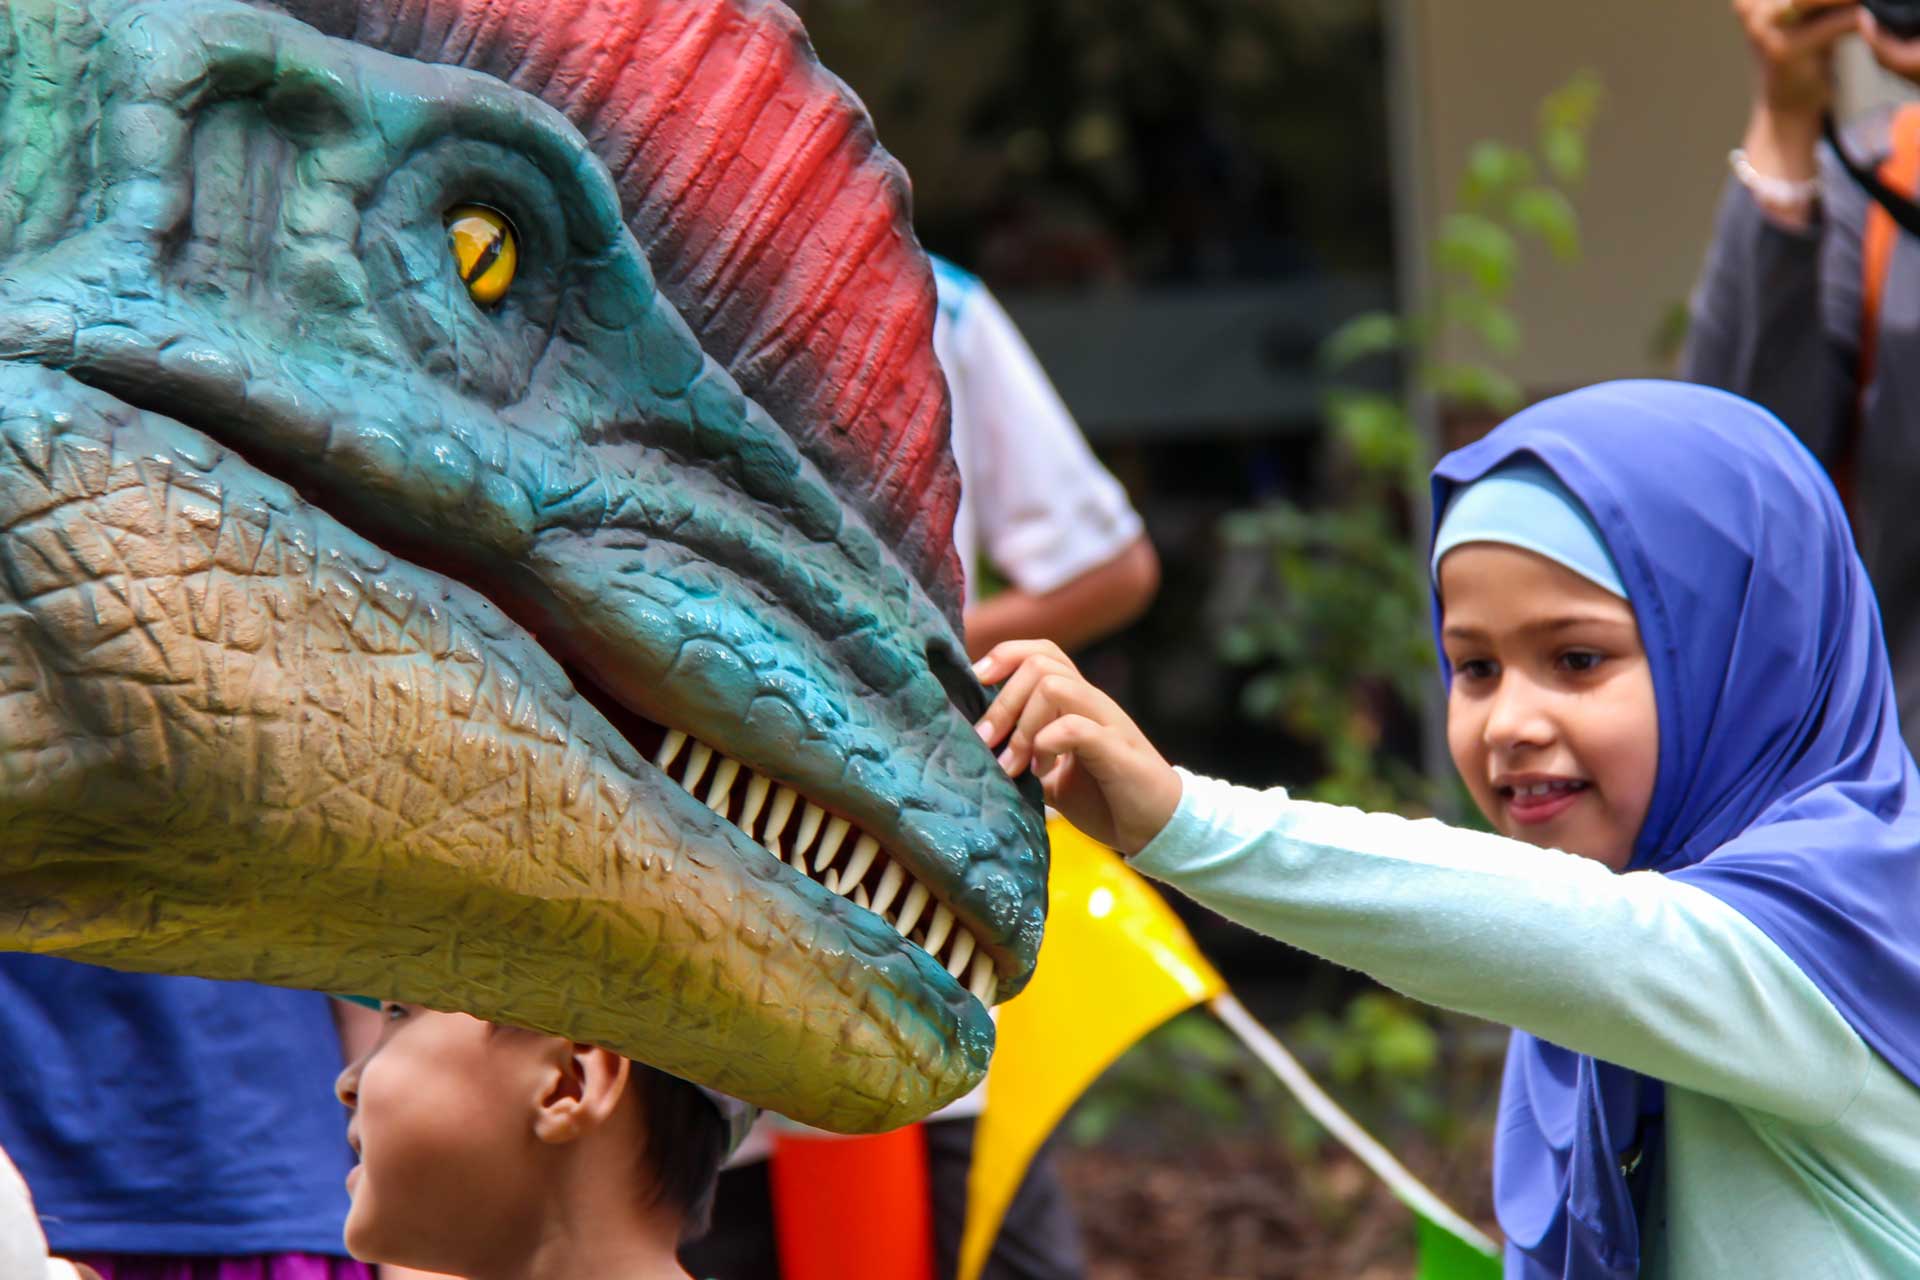 Child patting a dinosaur